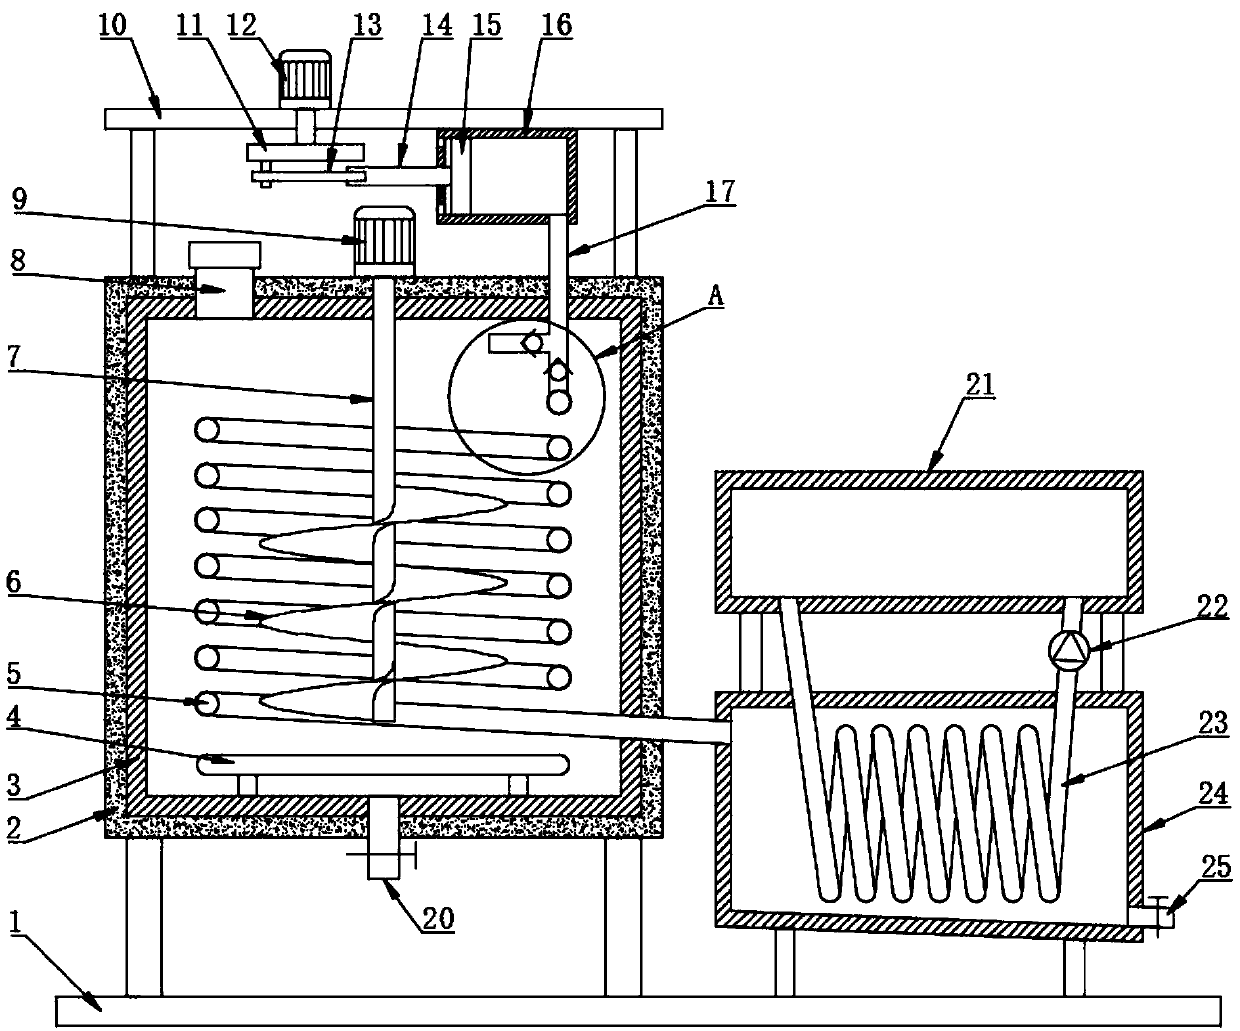 Heat circulation type quick solution distillation and condensation device